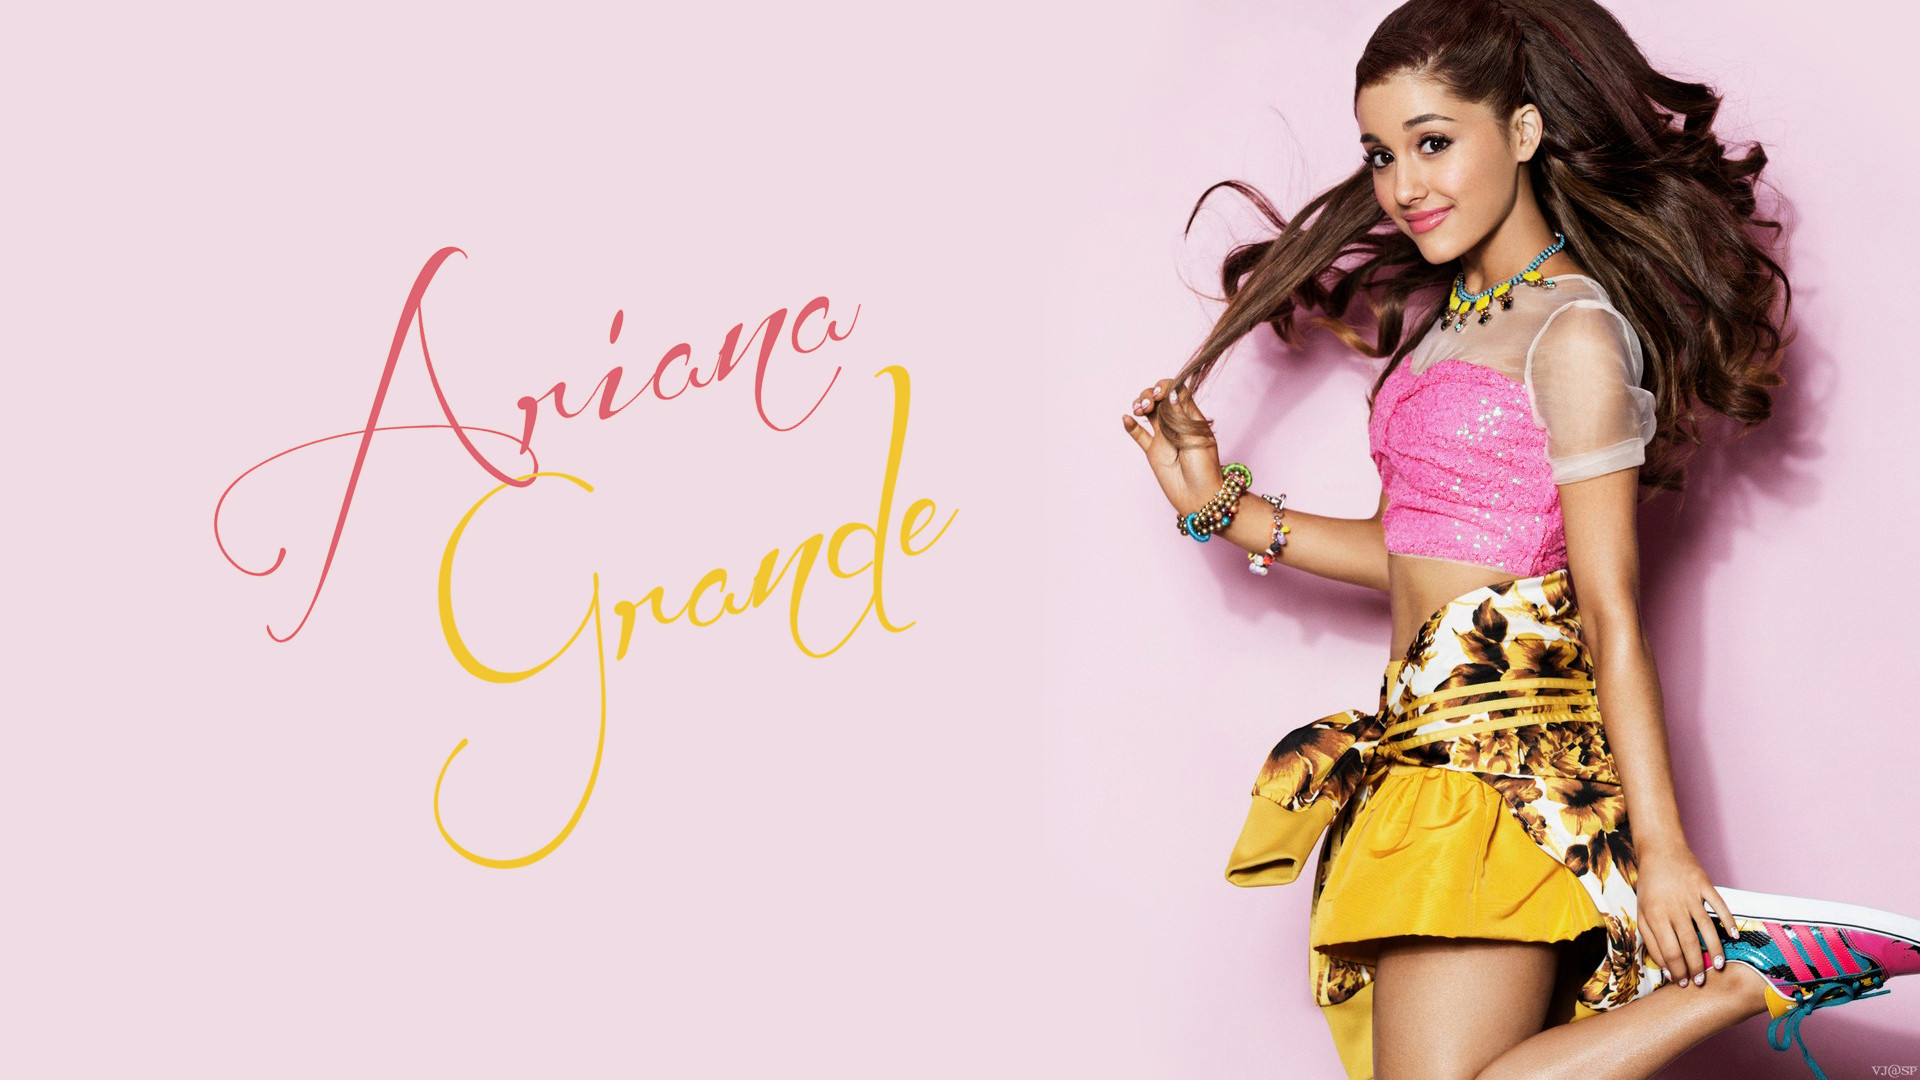 ariana grande wallpaper swt dwt  Ariana grande, Ariana grande photoshoot, Ariana  grande style